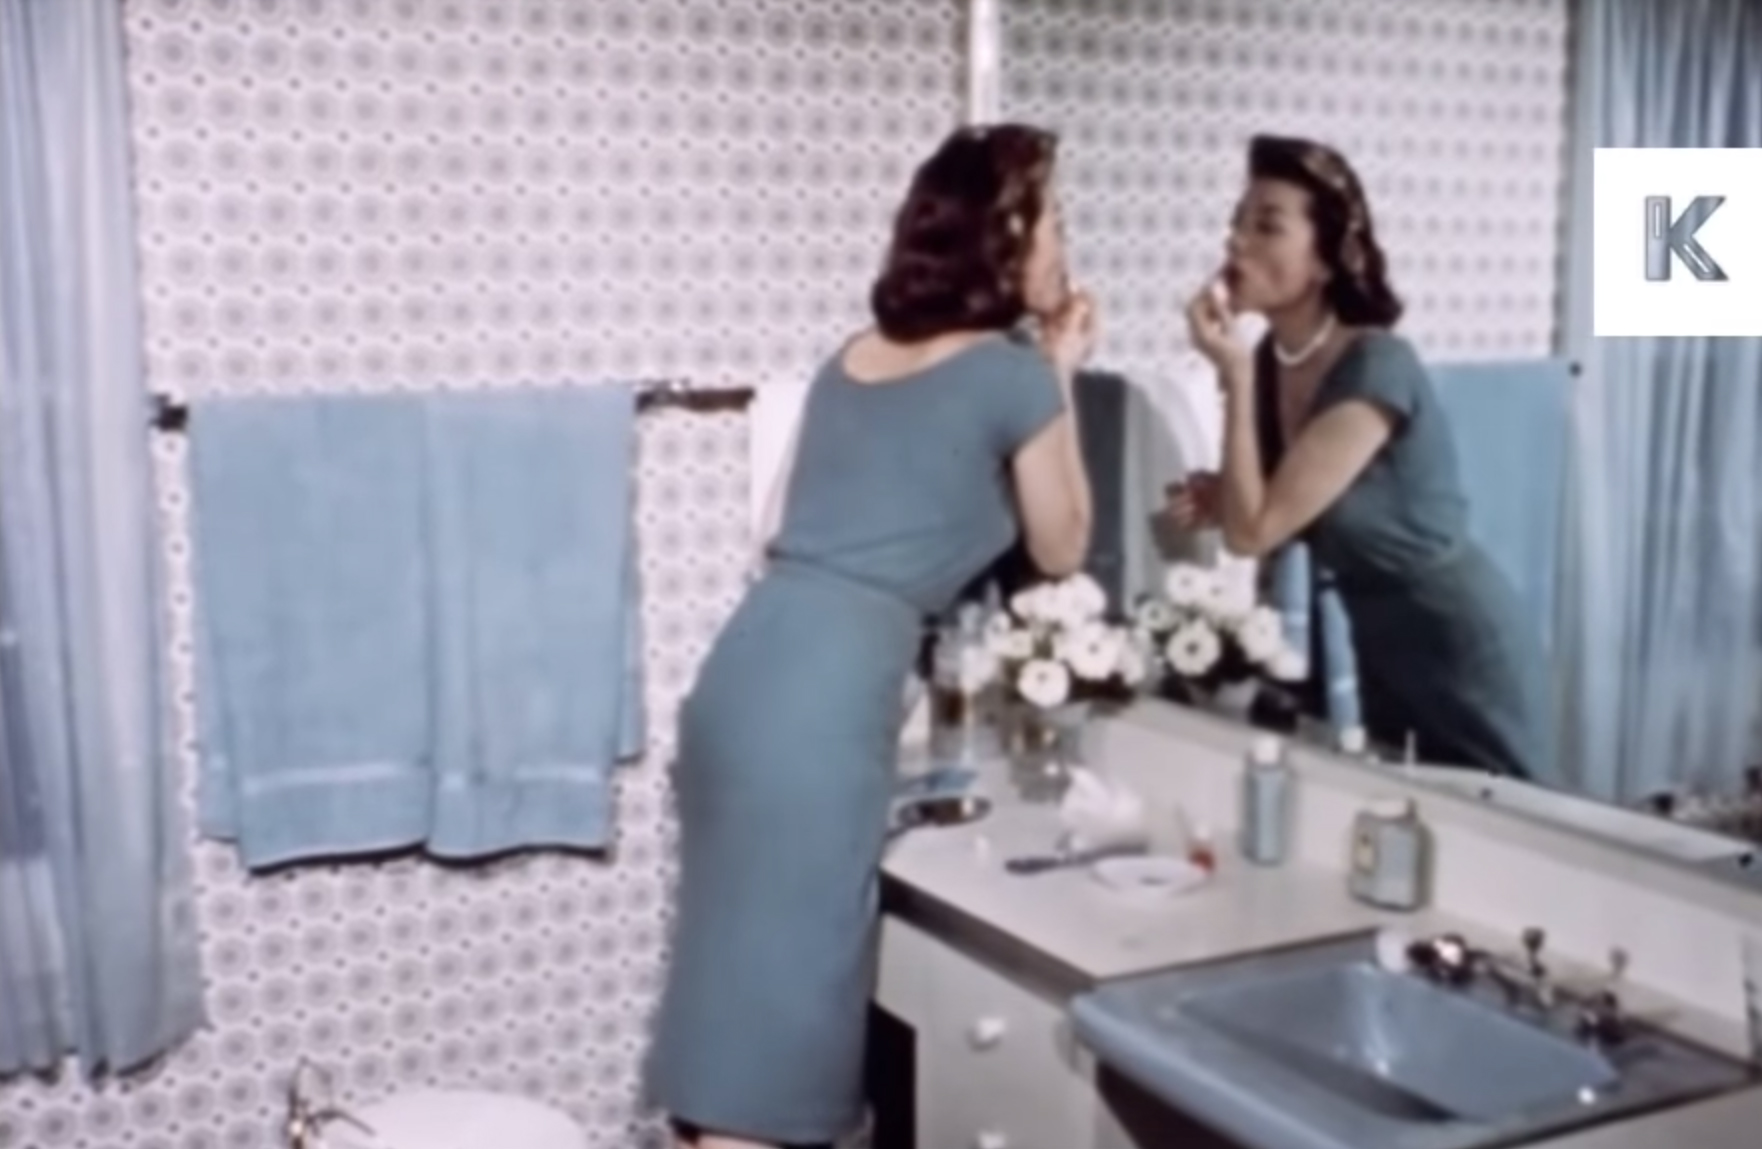 pastel 1950s bathroom